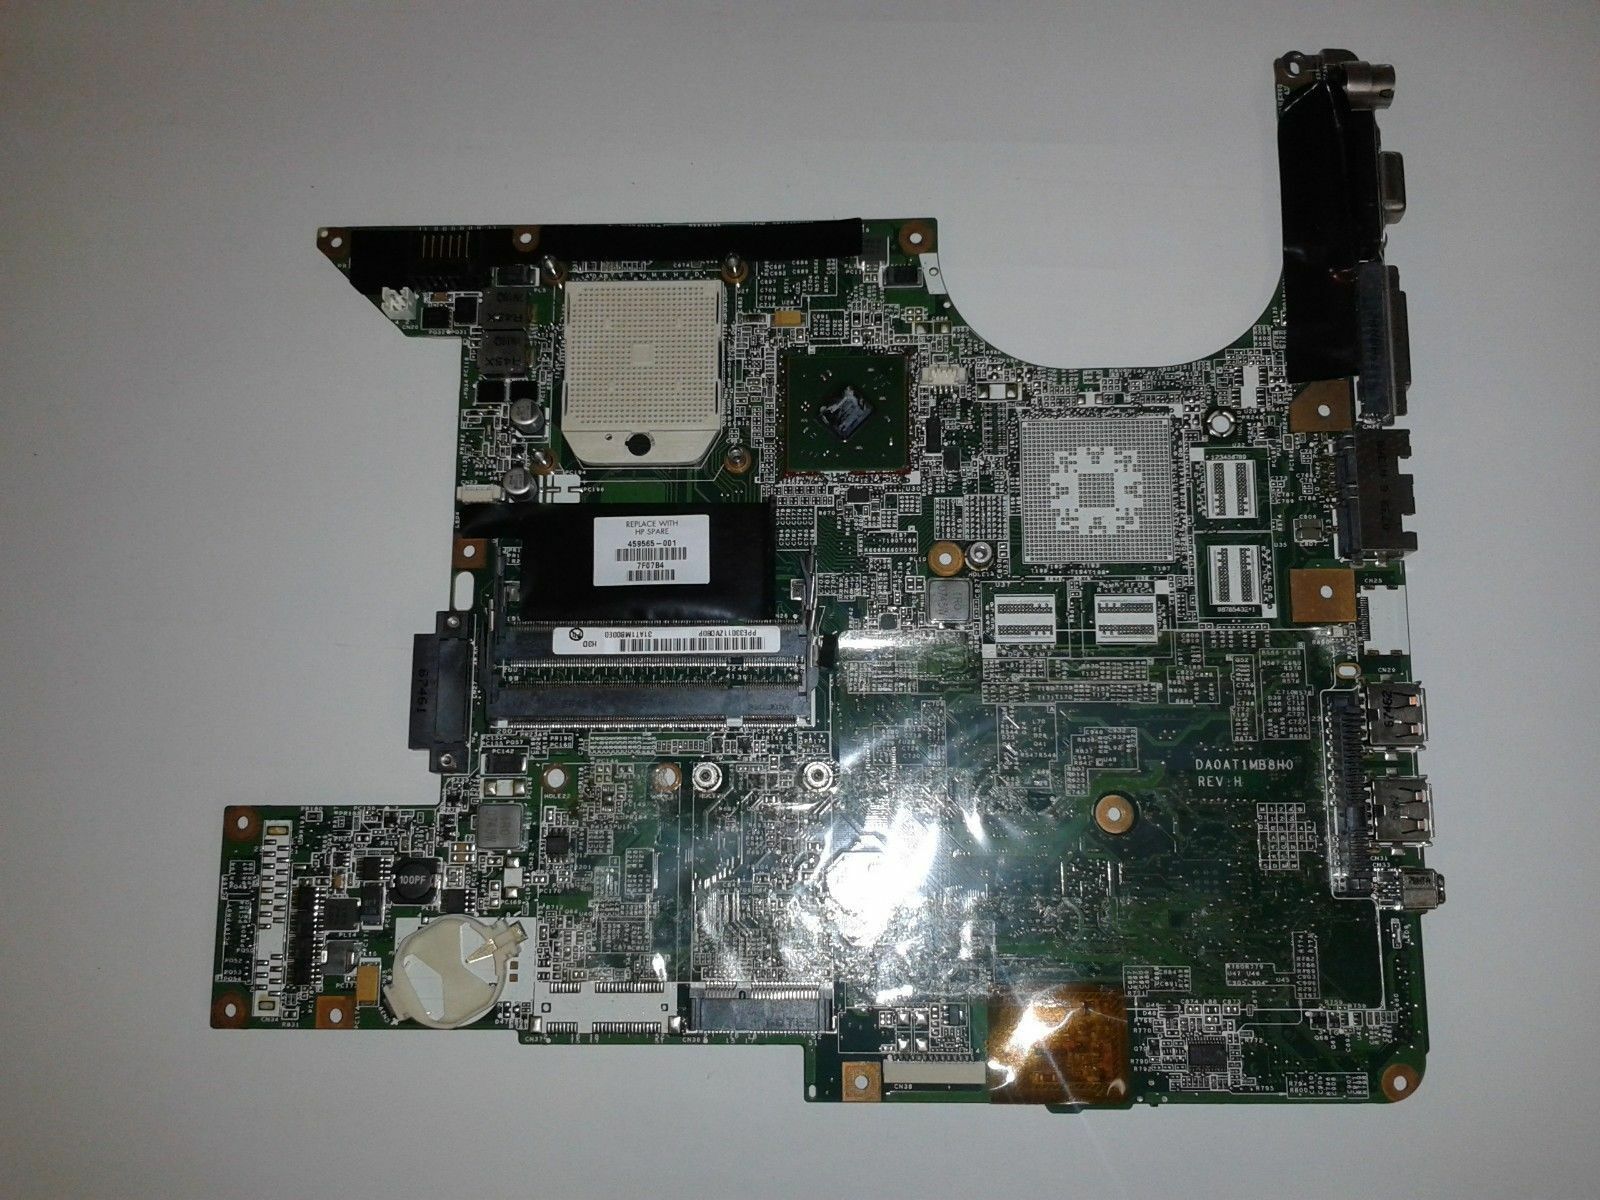 Genuine HP DV6000 DV6500 DV6700 DV6776 AMD Motherboard 459565-001 Tested. Nice Motherboard only Tracking N